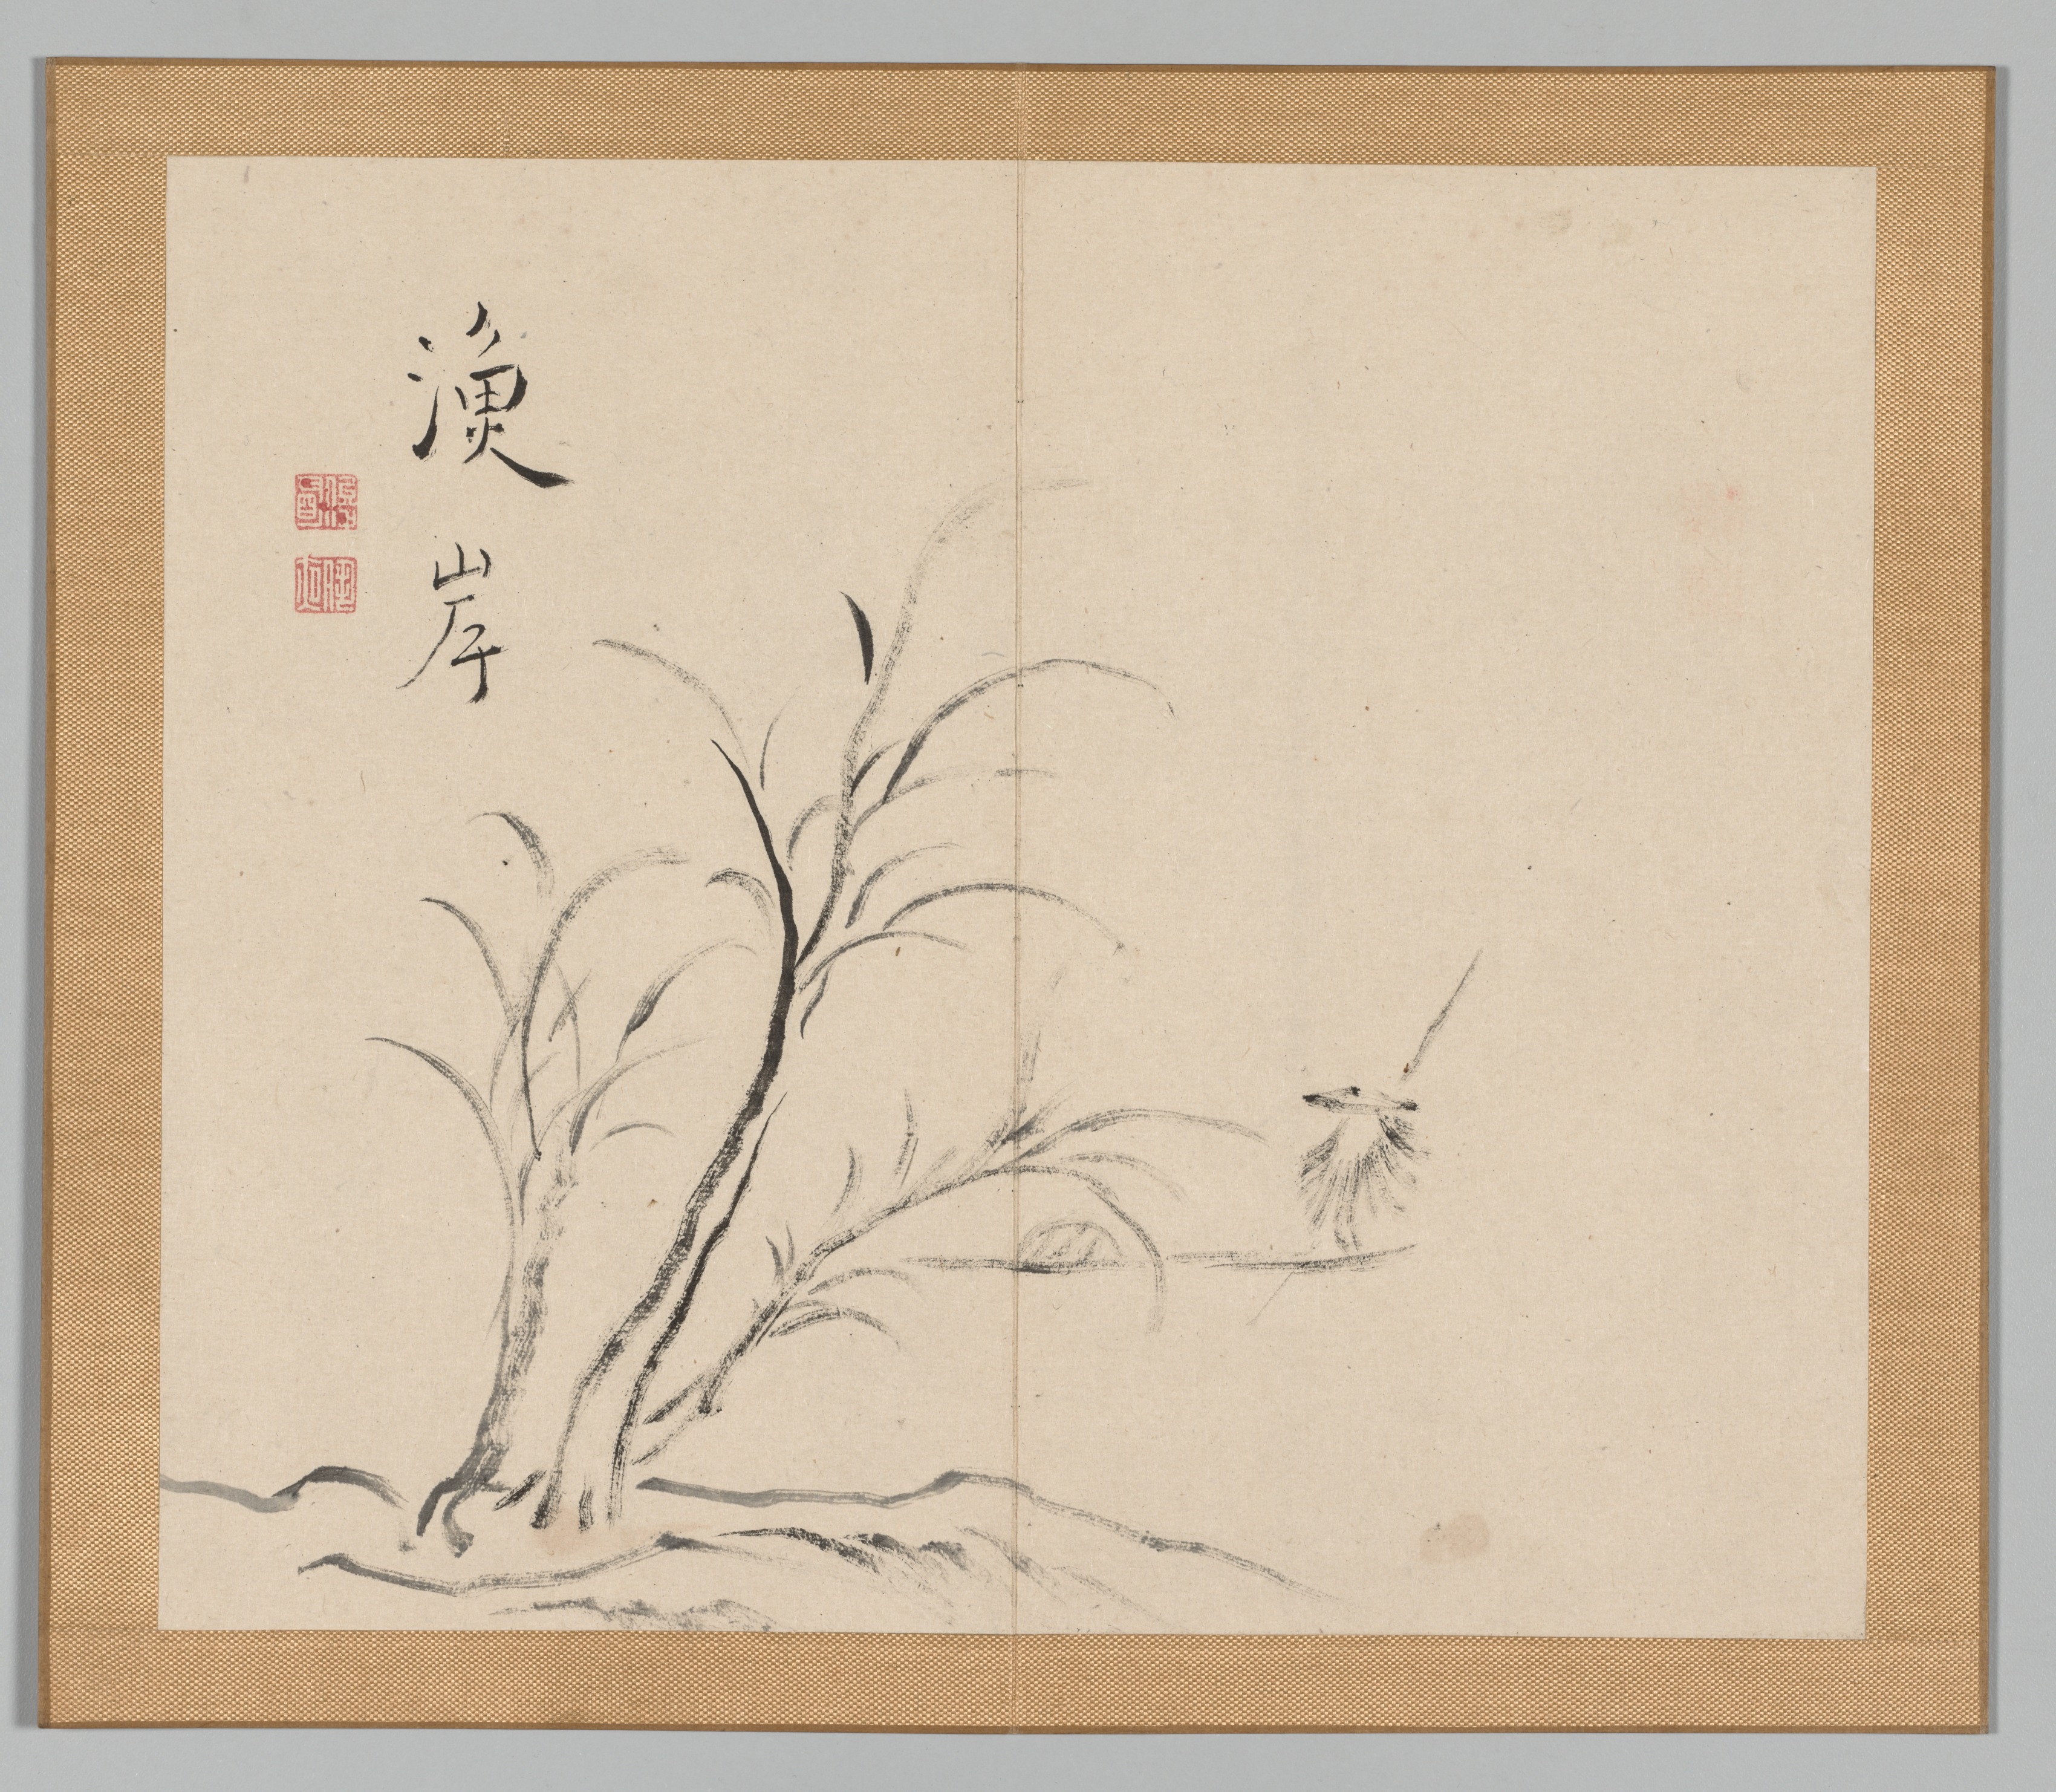 Reverberations of Taiga, Volume 2 (leaf 26)